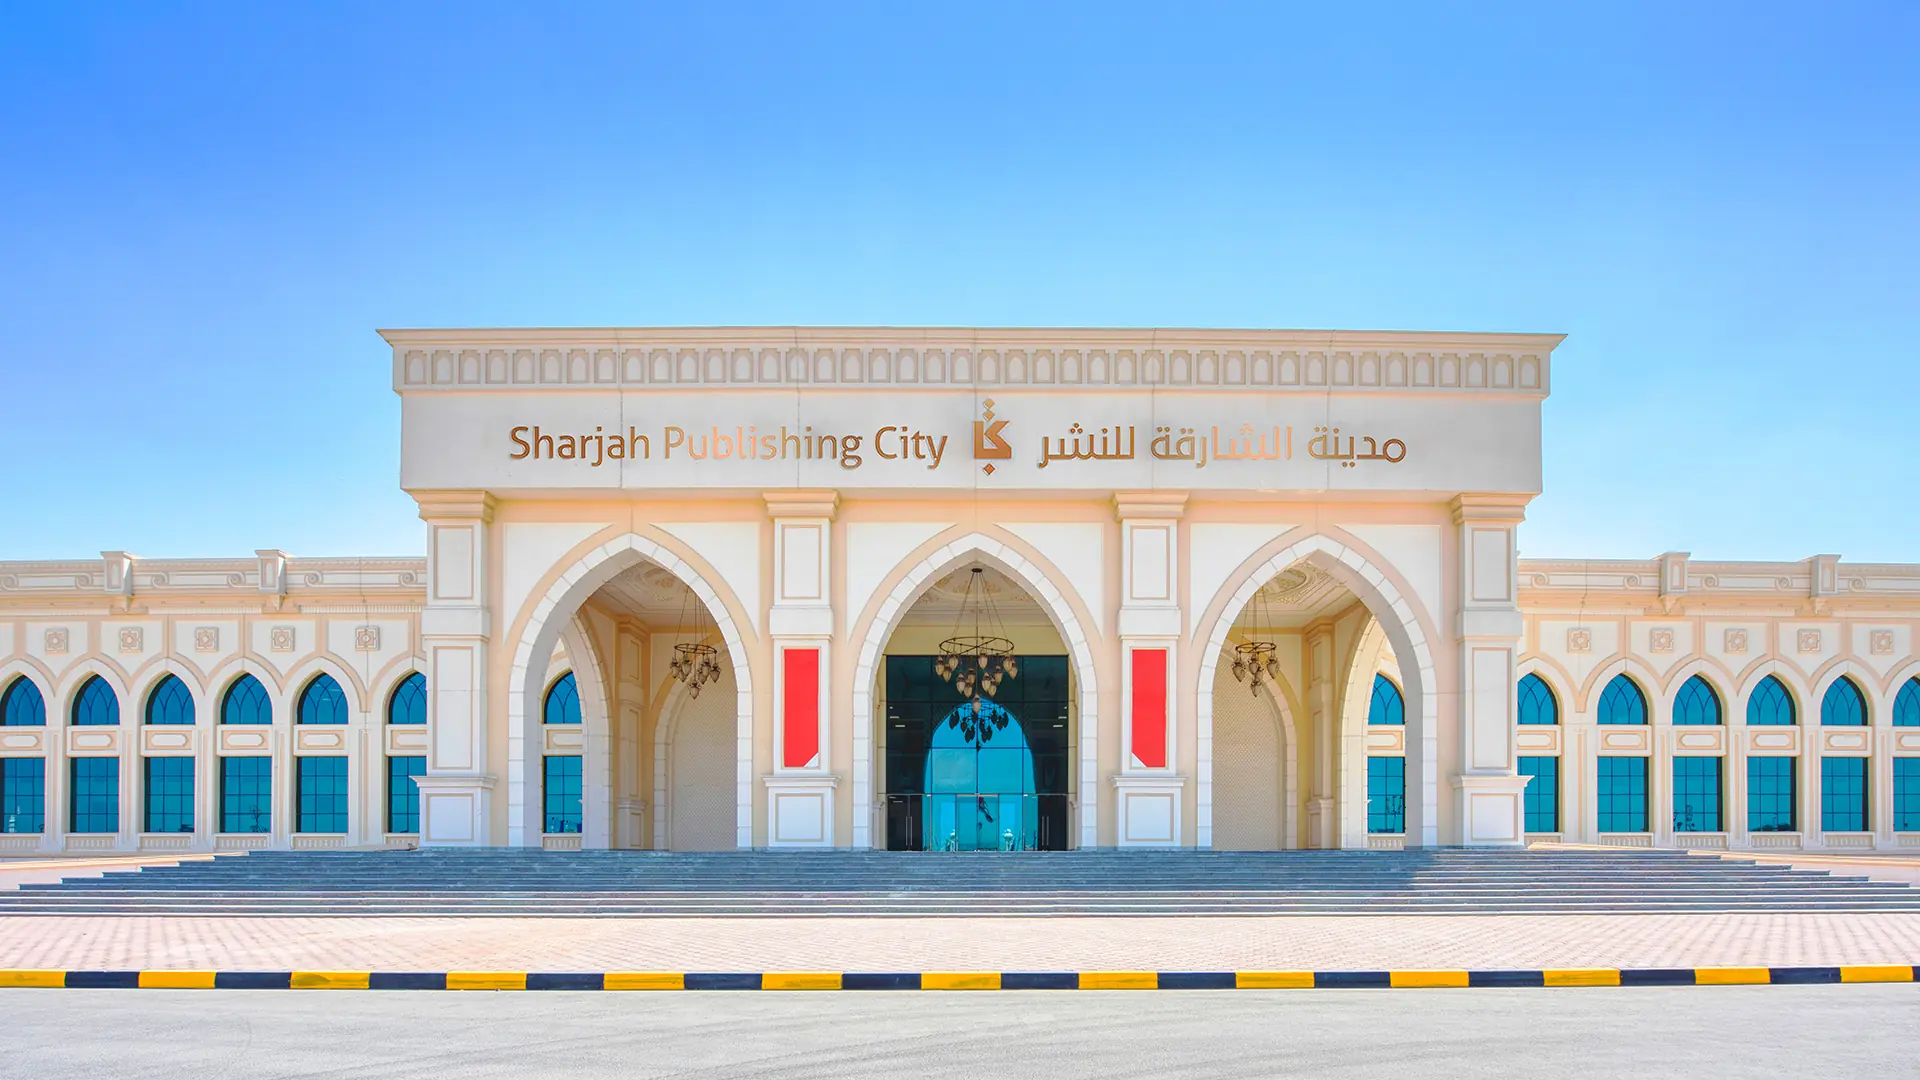 Start your Business in SPC - Sharjah Publishing City Free Zone, UAE - Smart Zones UAE